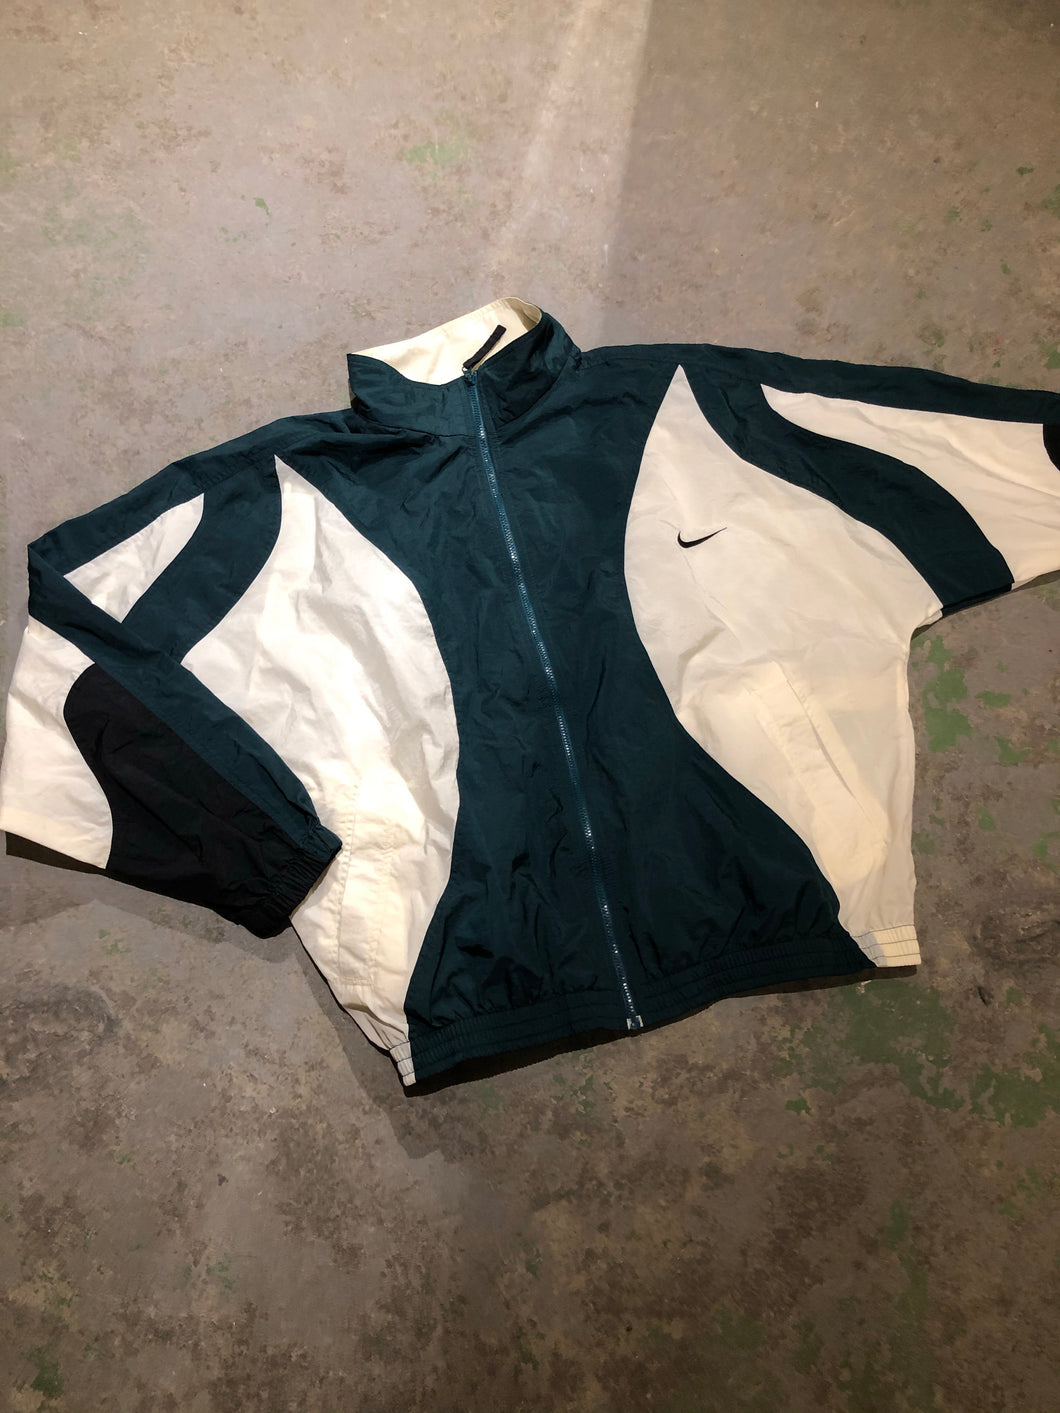 Full zip Nike jacket